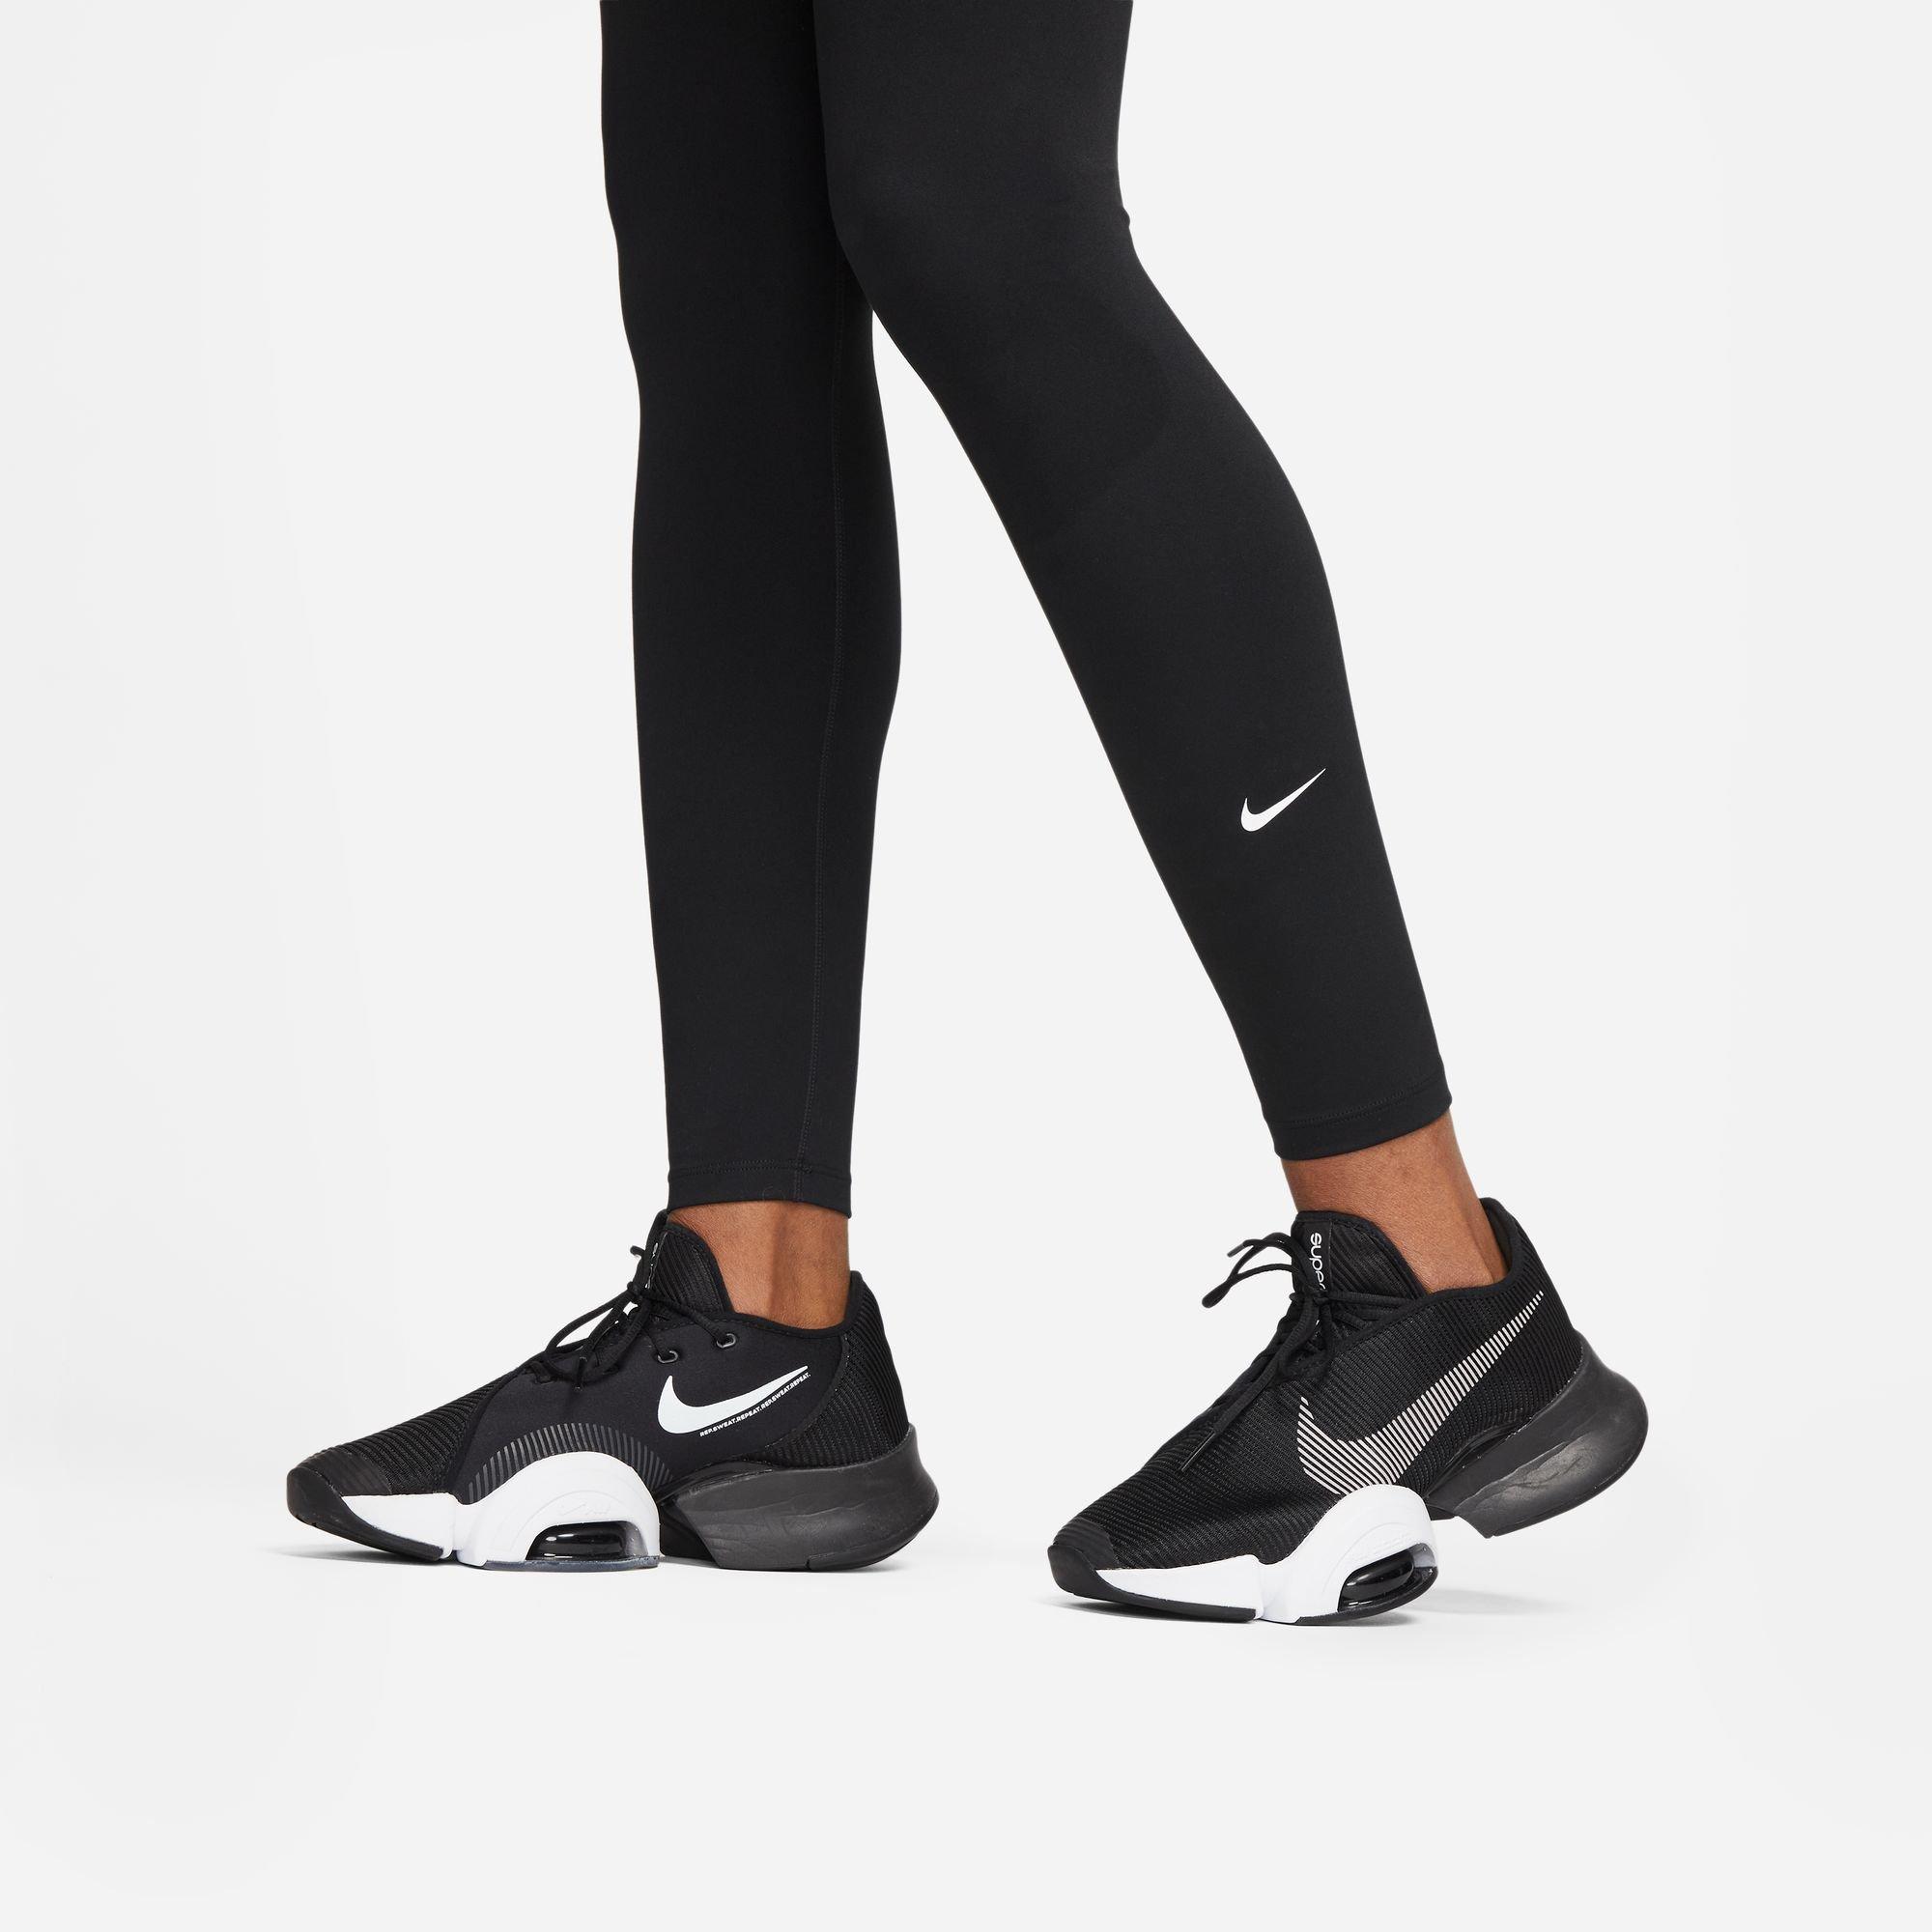 Nike Women's One Dri-FIT High-Rise Leggings - Black